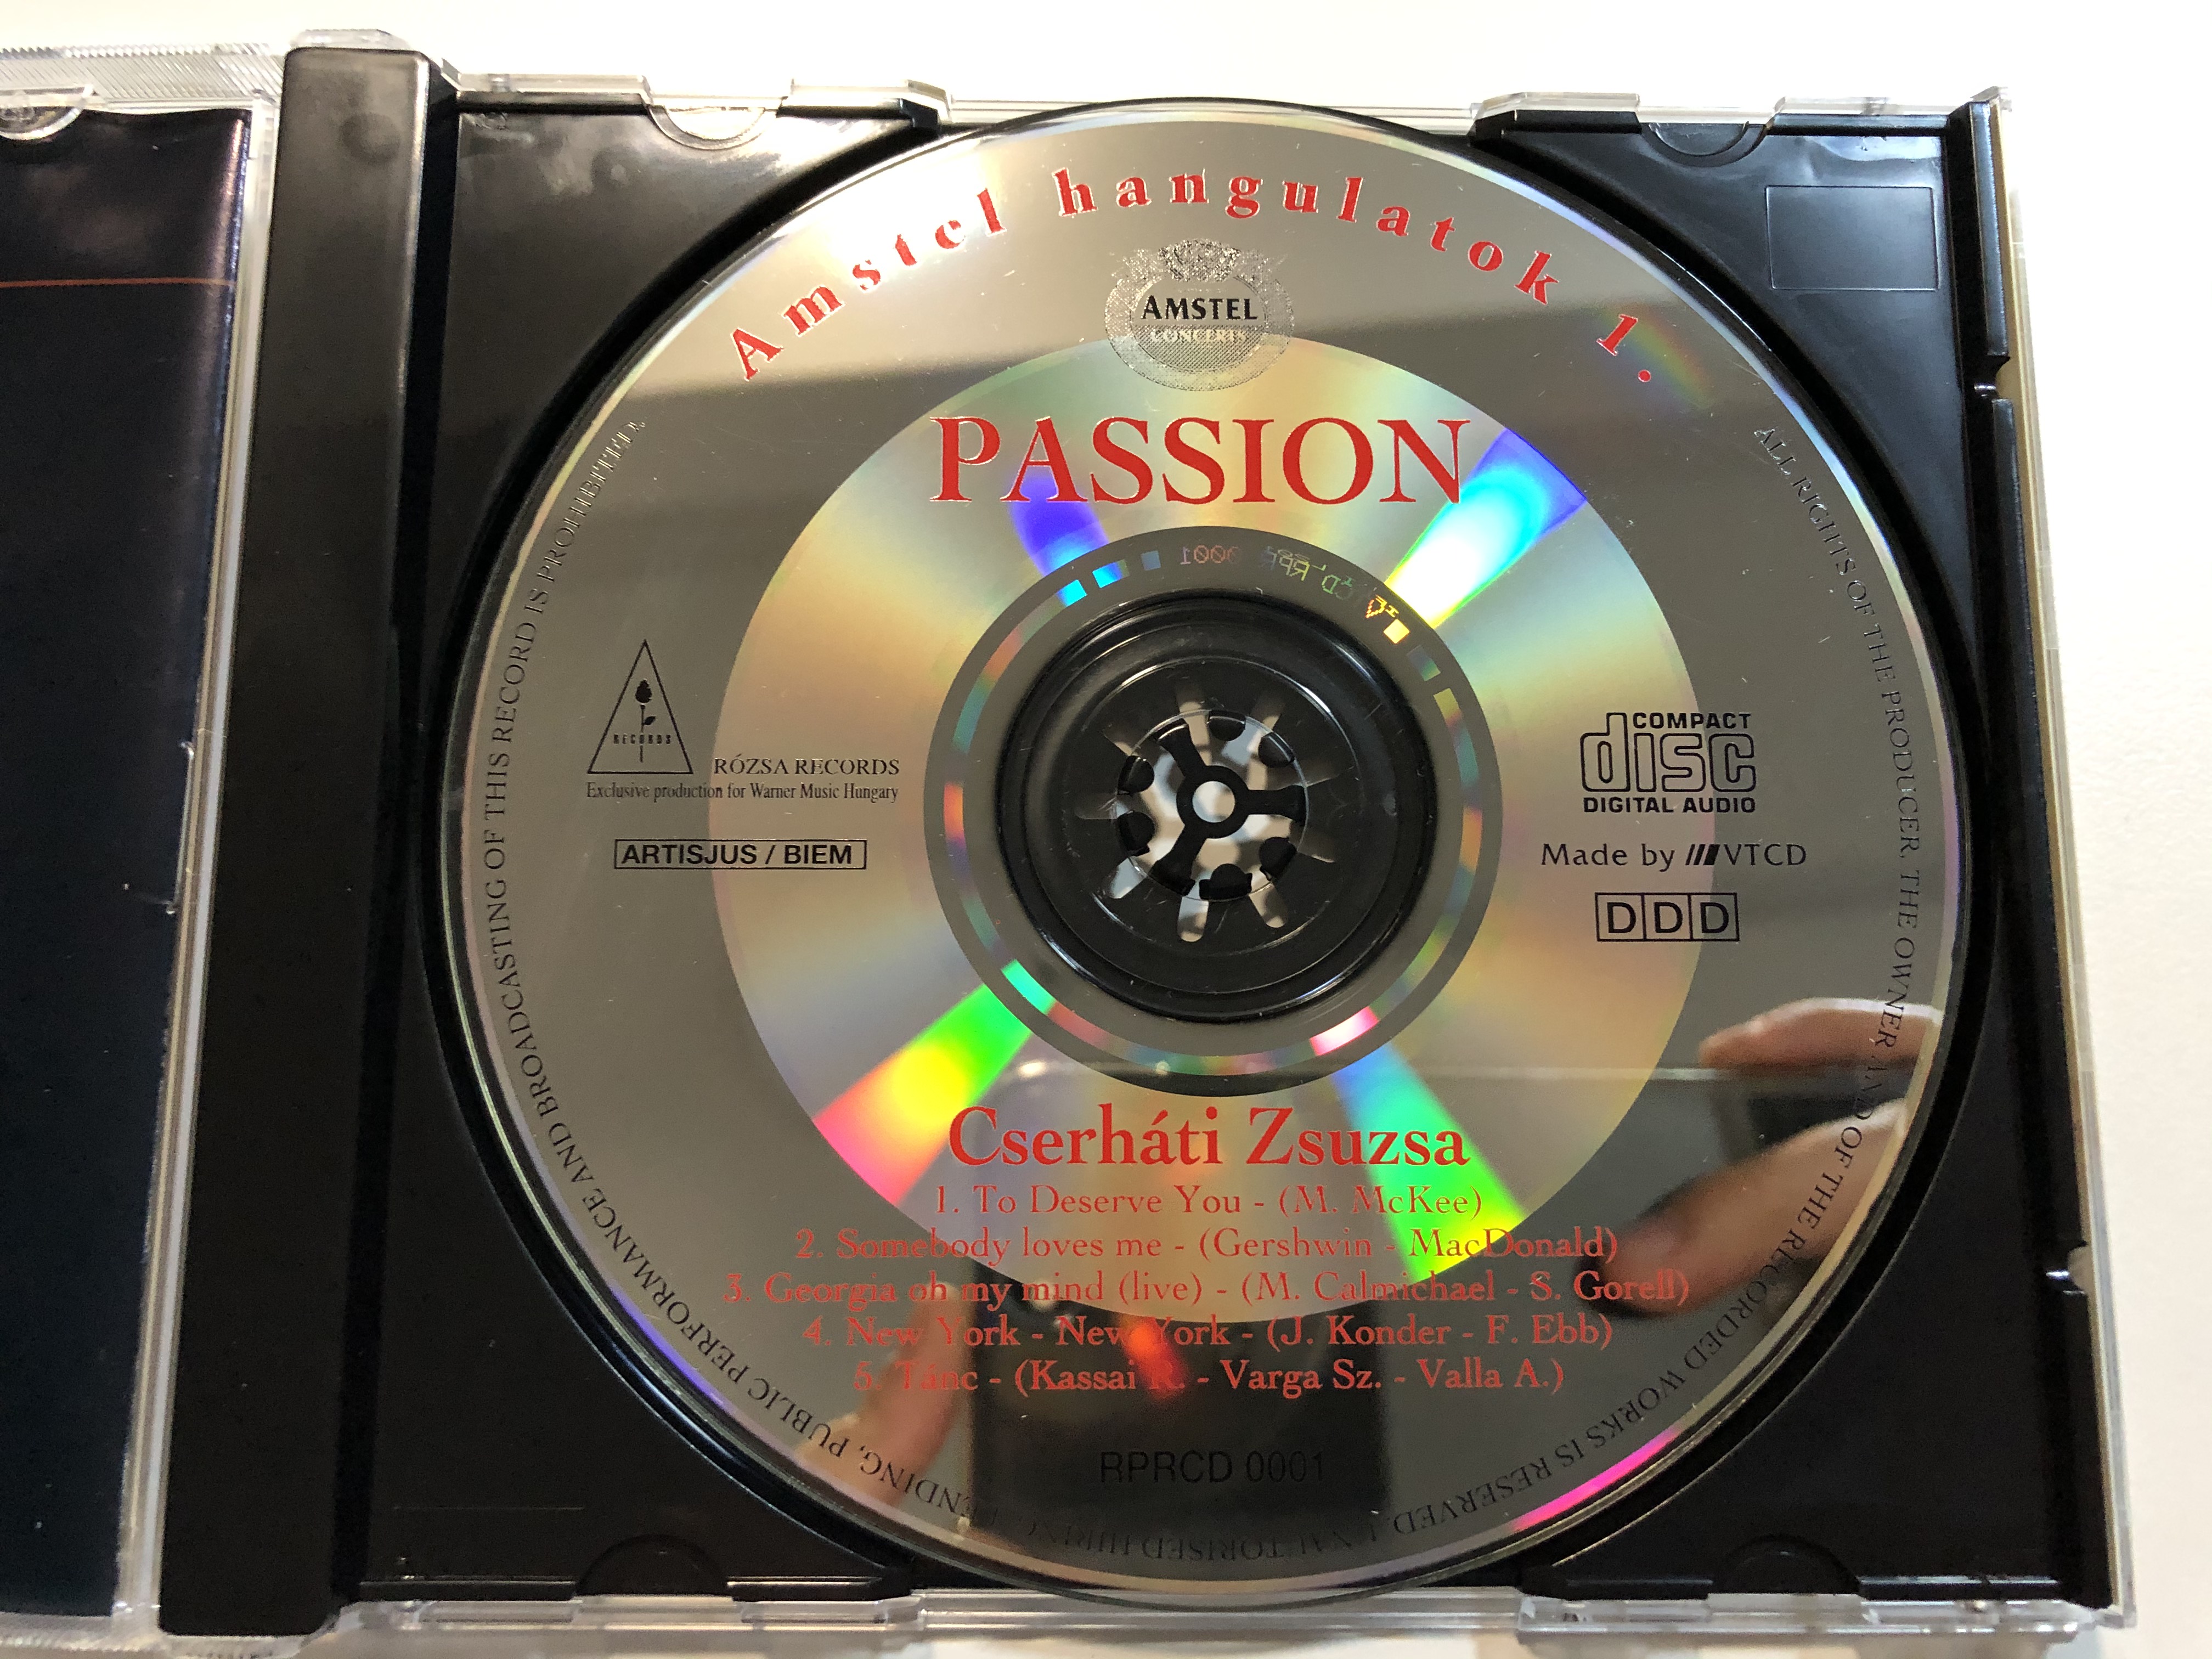 cserh-ti-zsuzsa-passion-amstel-hangulatok-i.-r-zsa-records-audio-cd-1997-rprcd-0001-6-.jpg